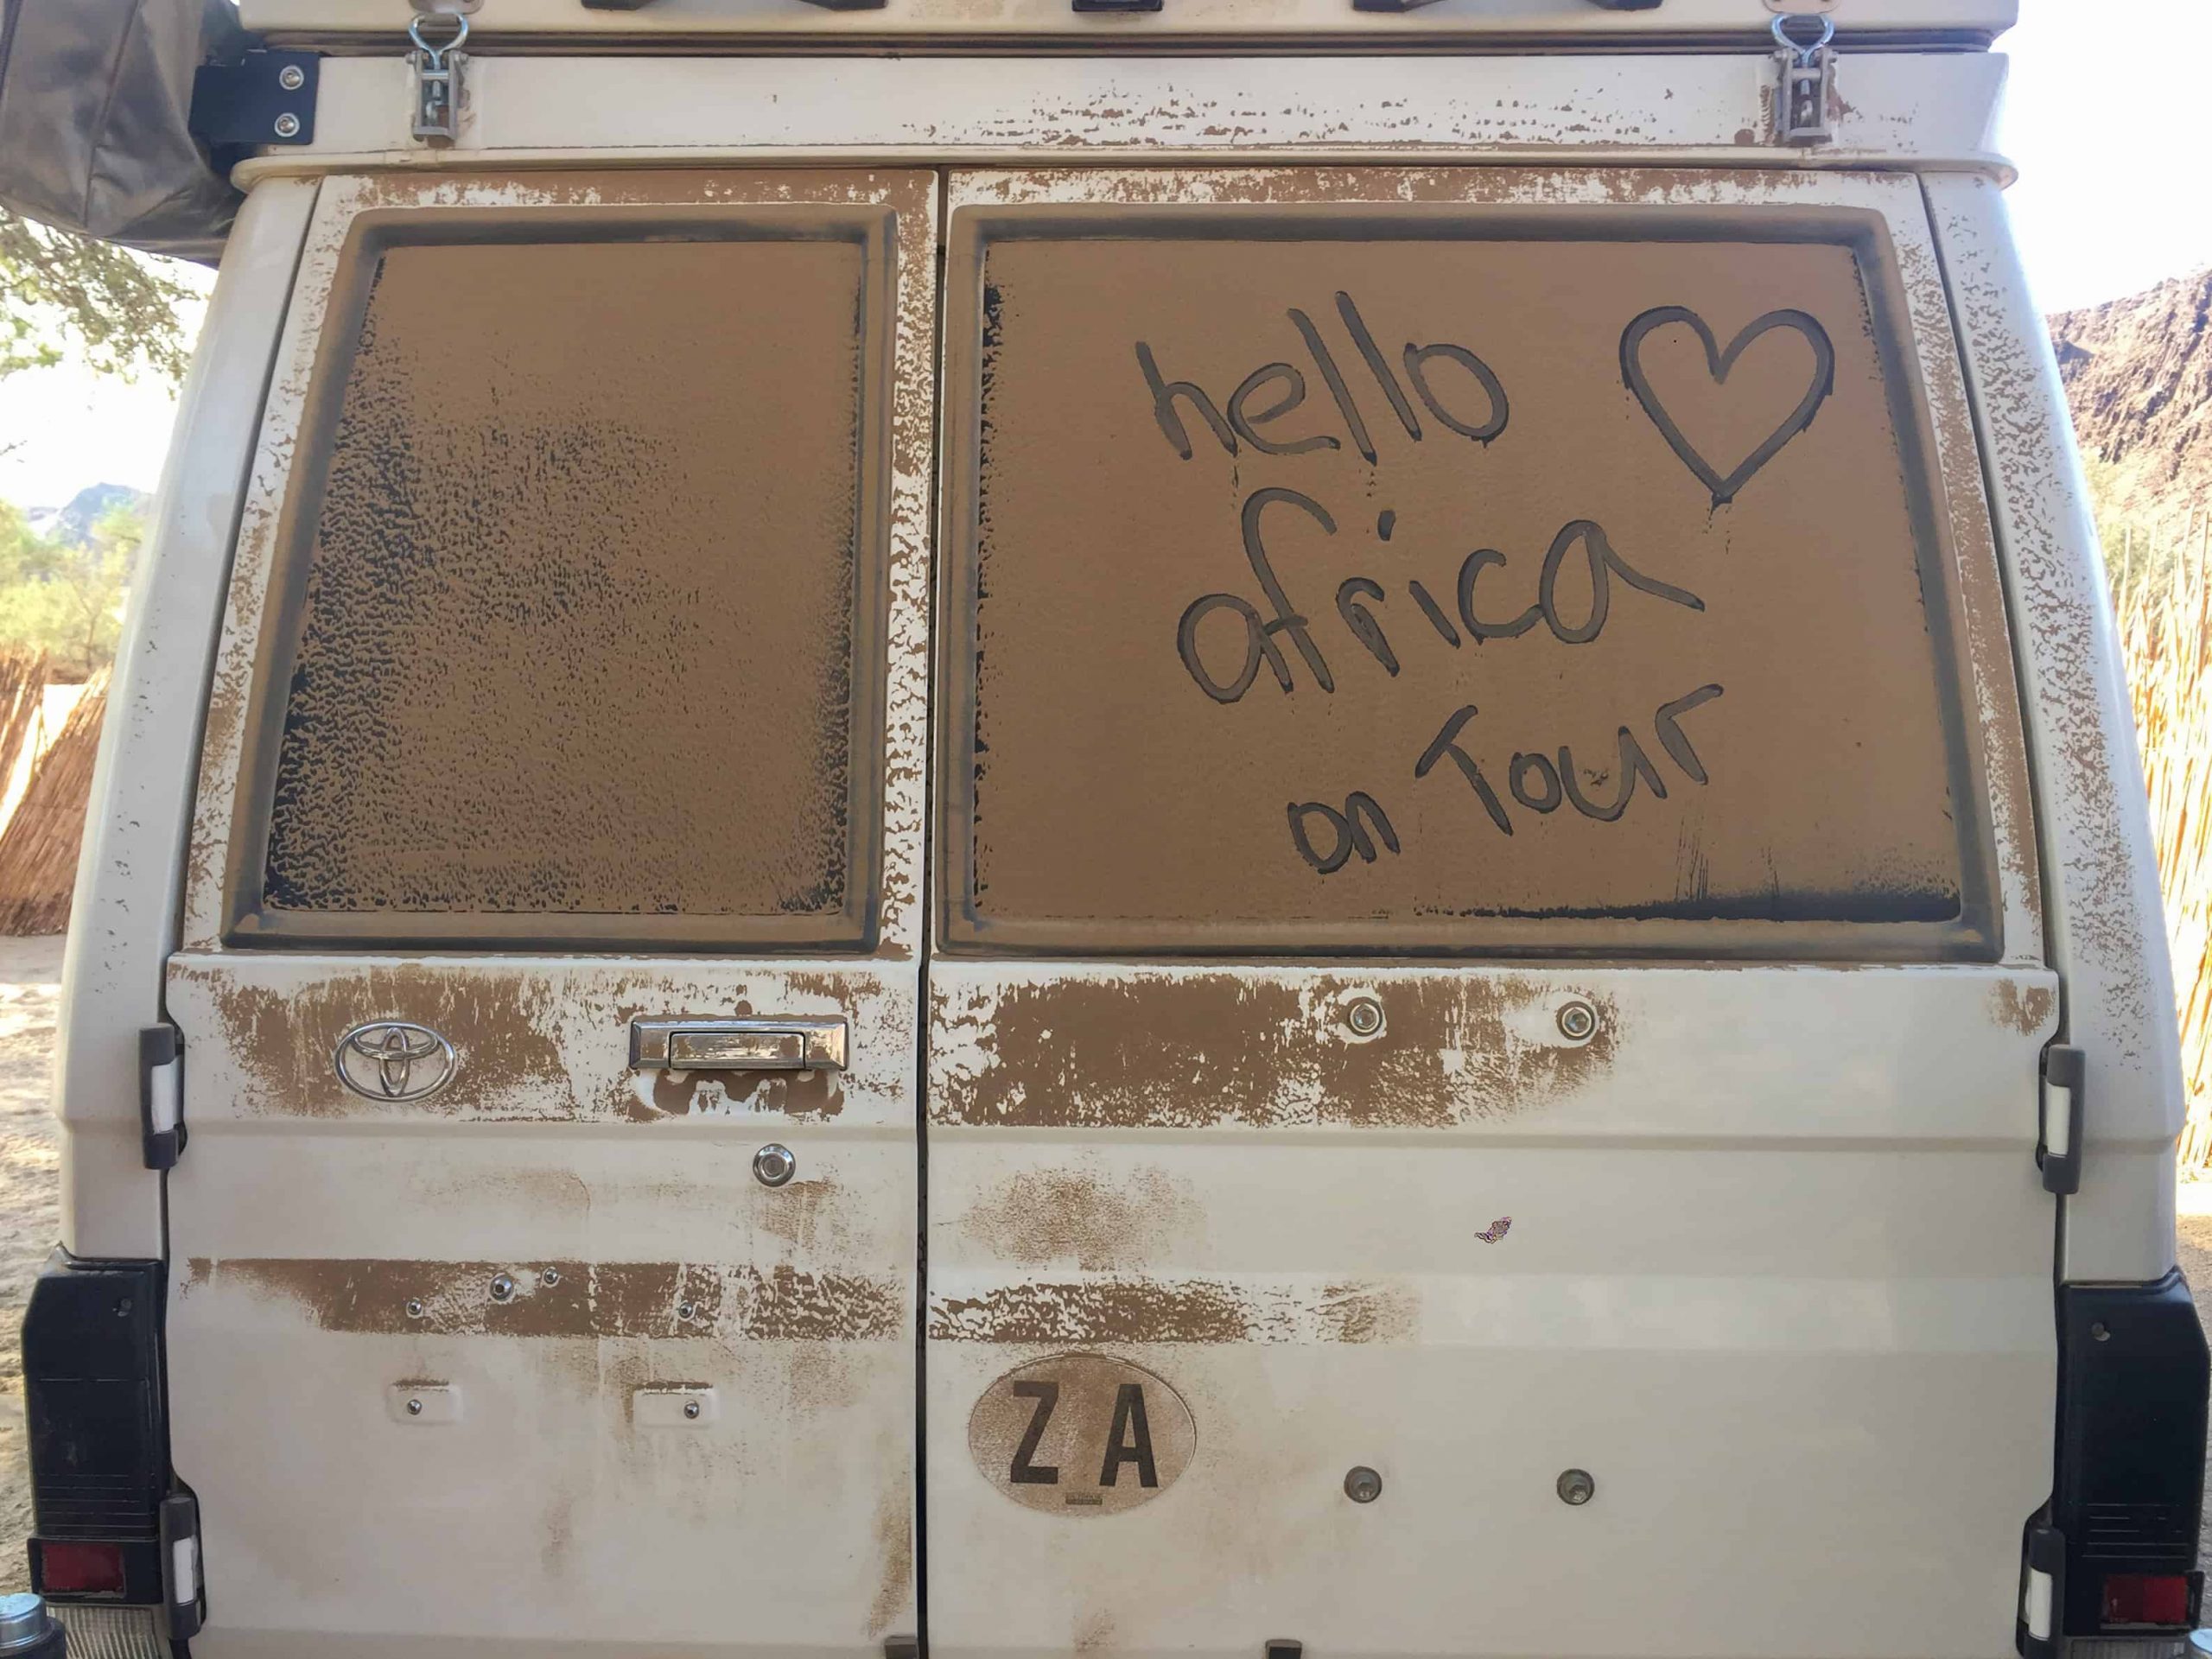 Hello Africa on Tour